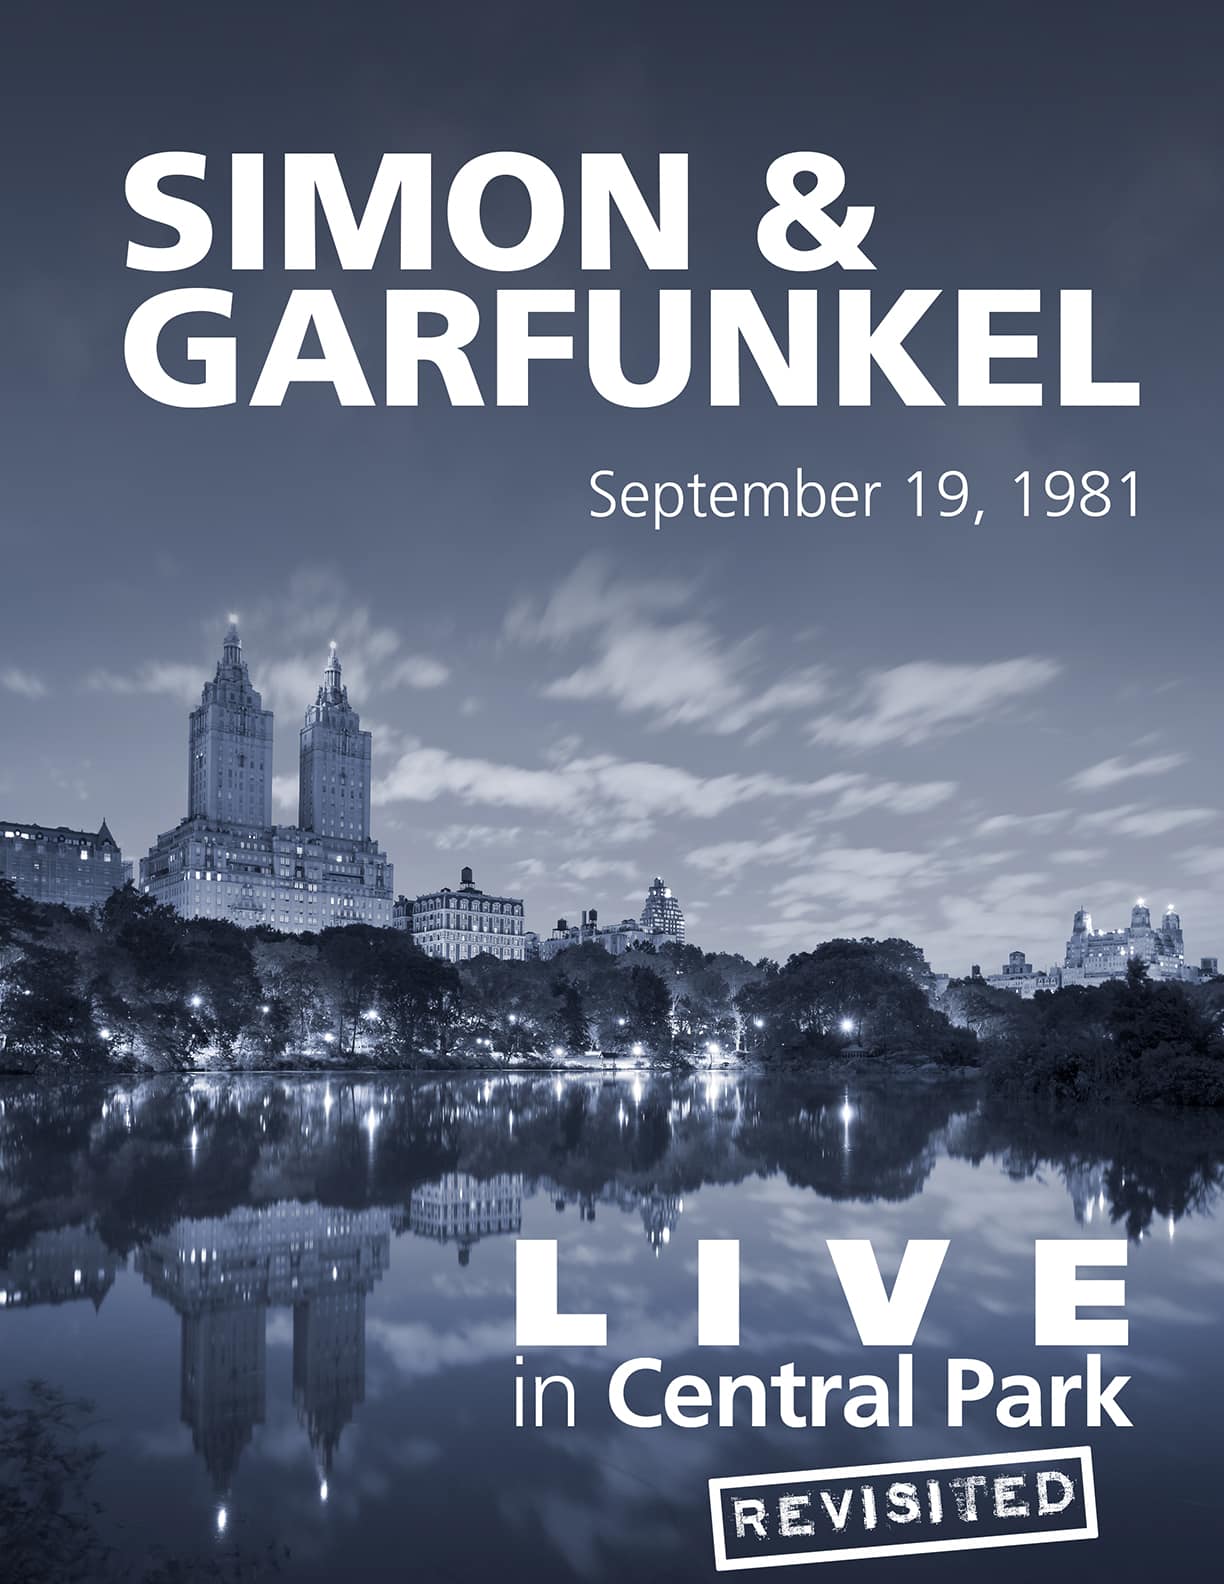 Poster reading "Simon & Garfunkel Live in Central Park [revisited]"